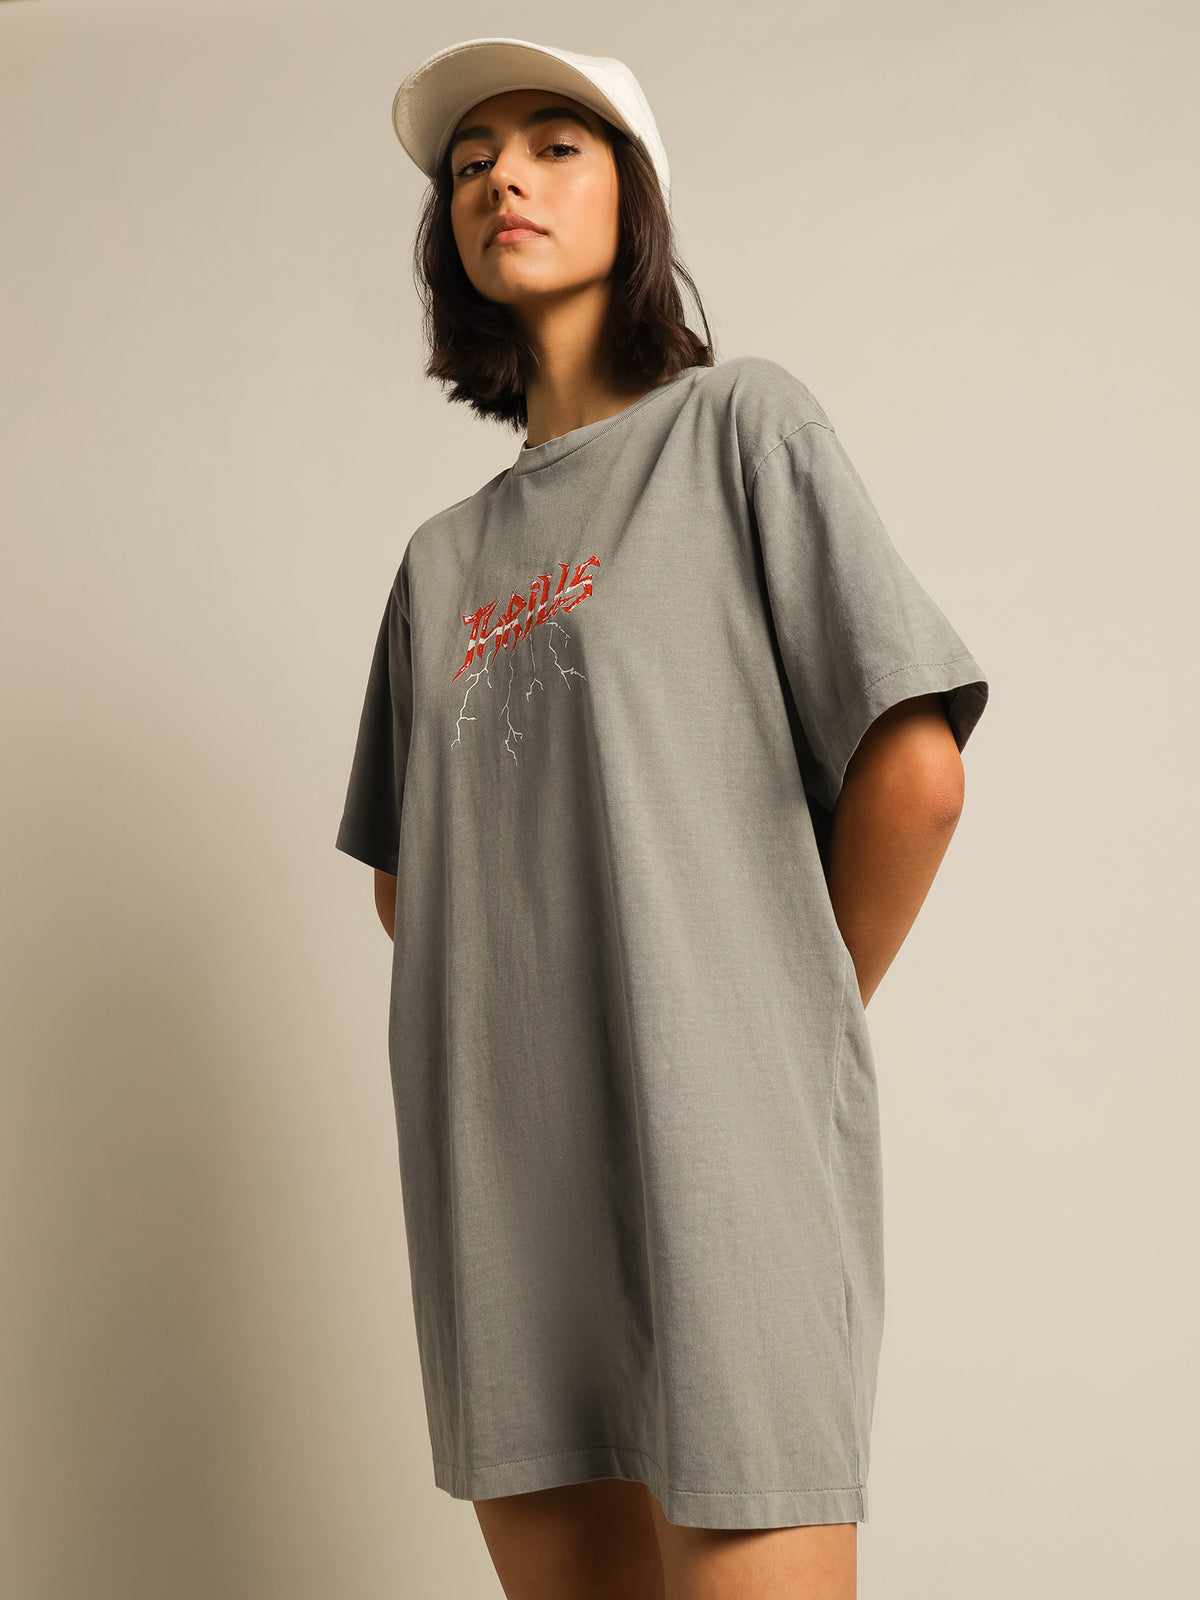 Shocker Merch Fit T-Shirt Dress in Washed Grey